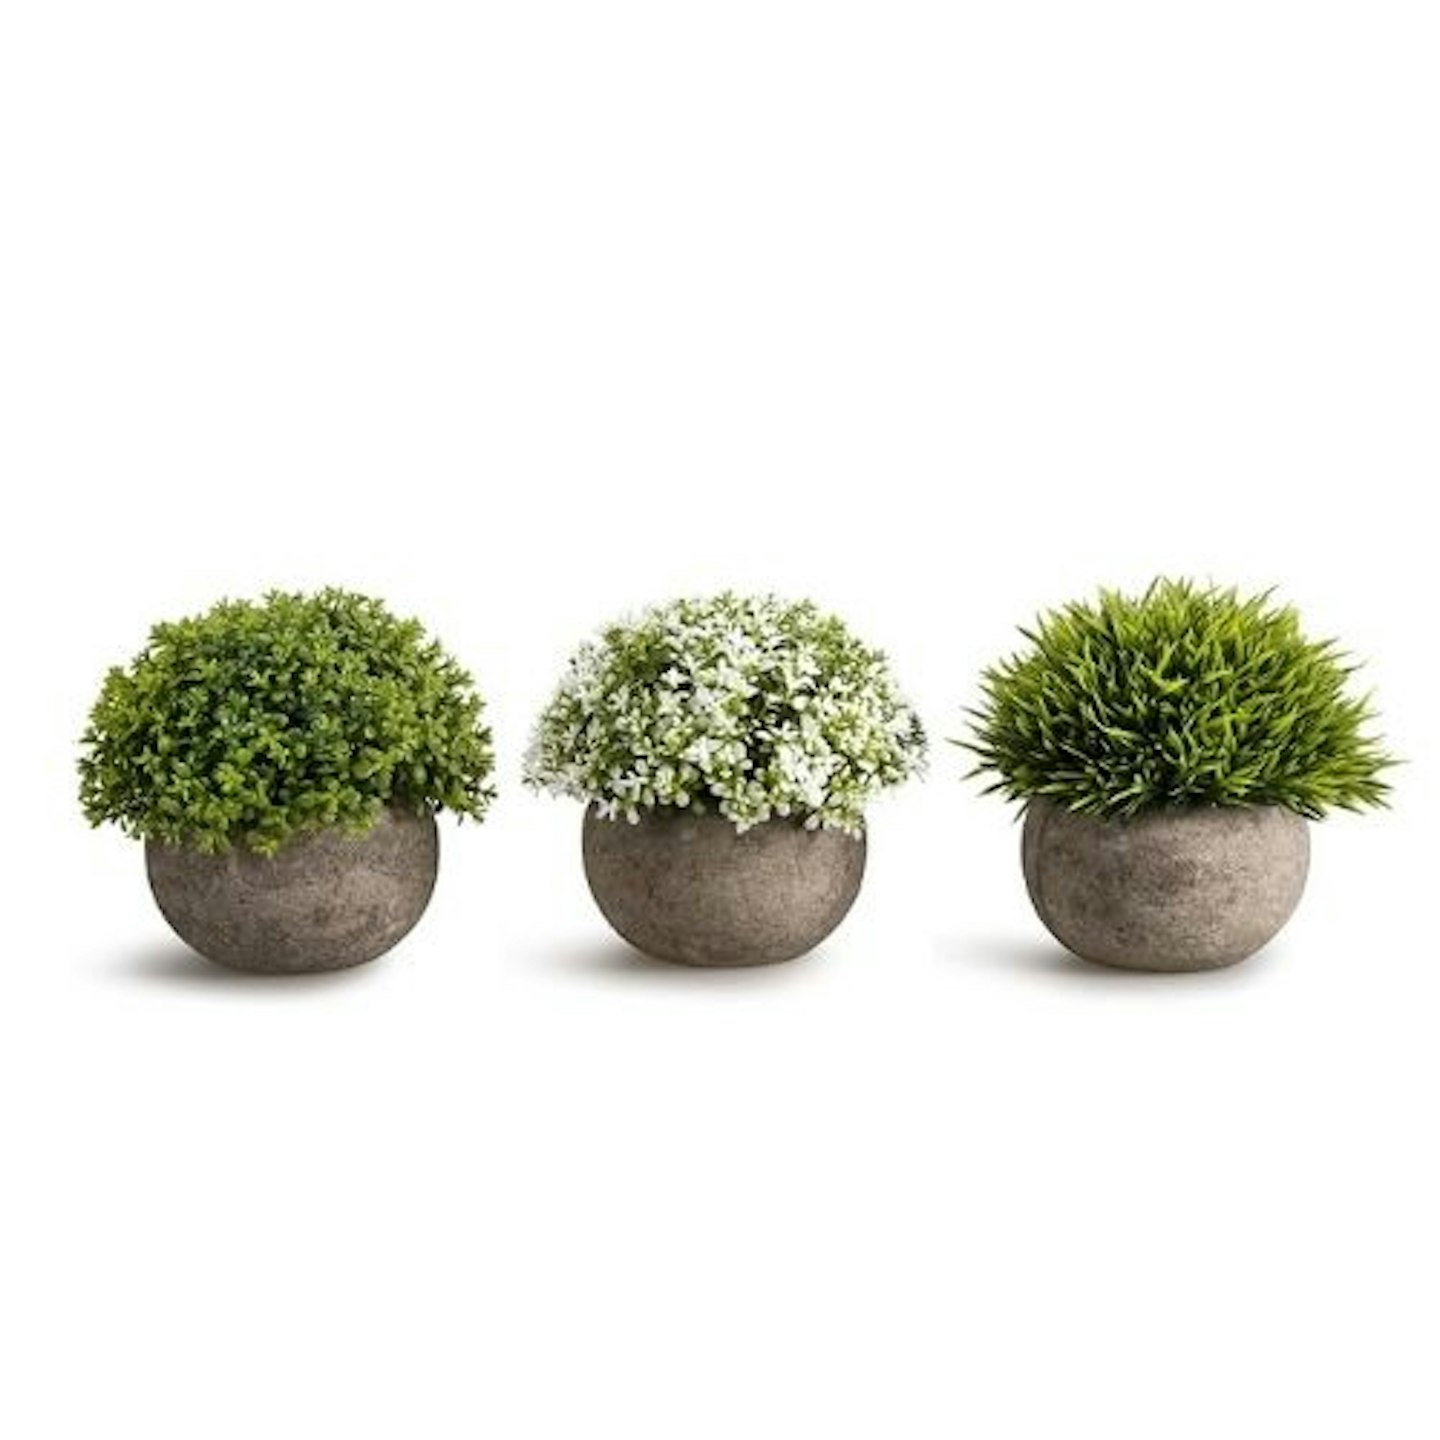 OPPS Artificial Mini Plants, set of 3